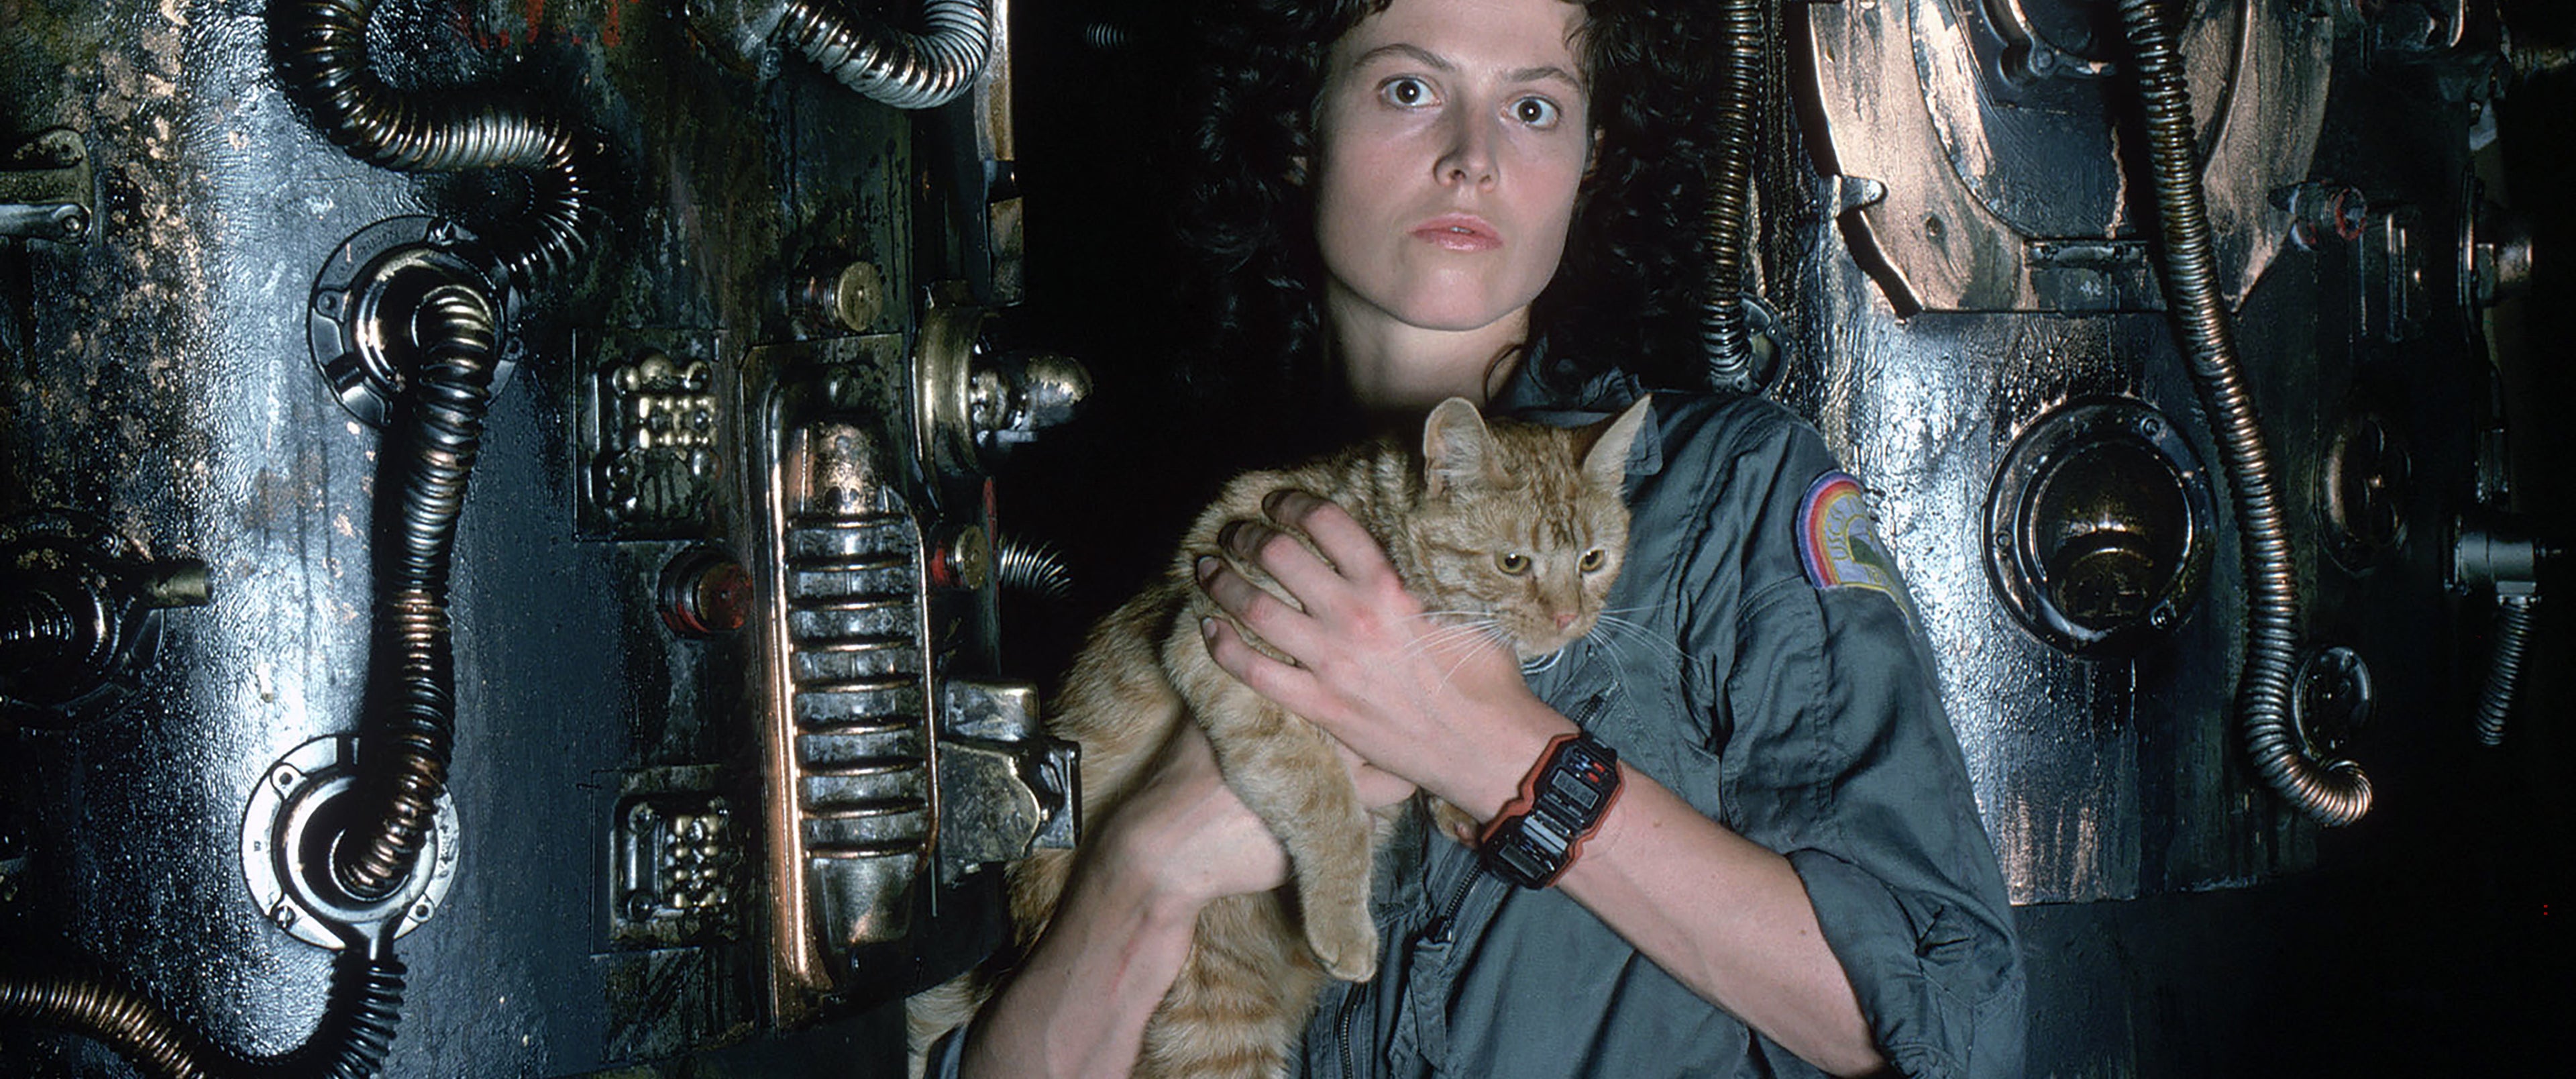 Still from Alien. Sigourney Weaver as Ellen Ripley holding Jonsey the cat